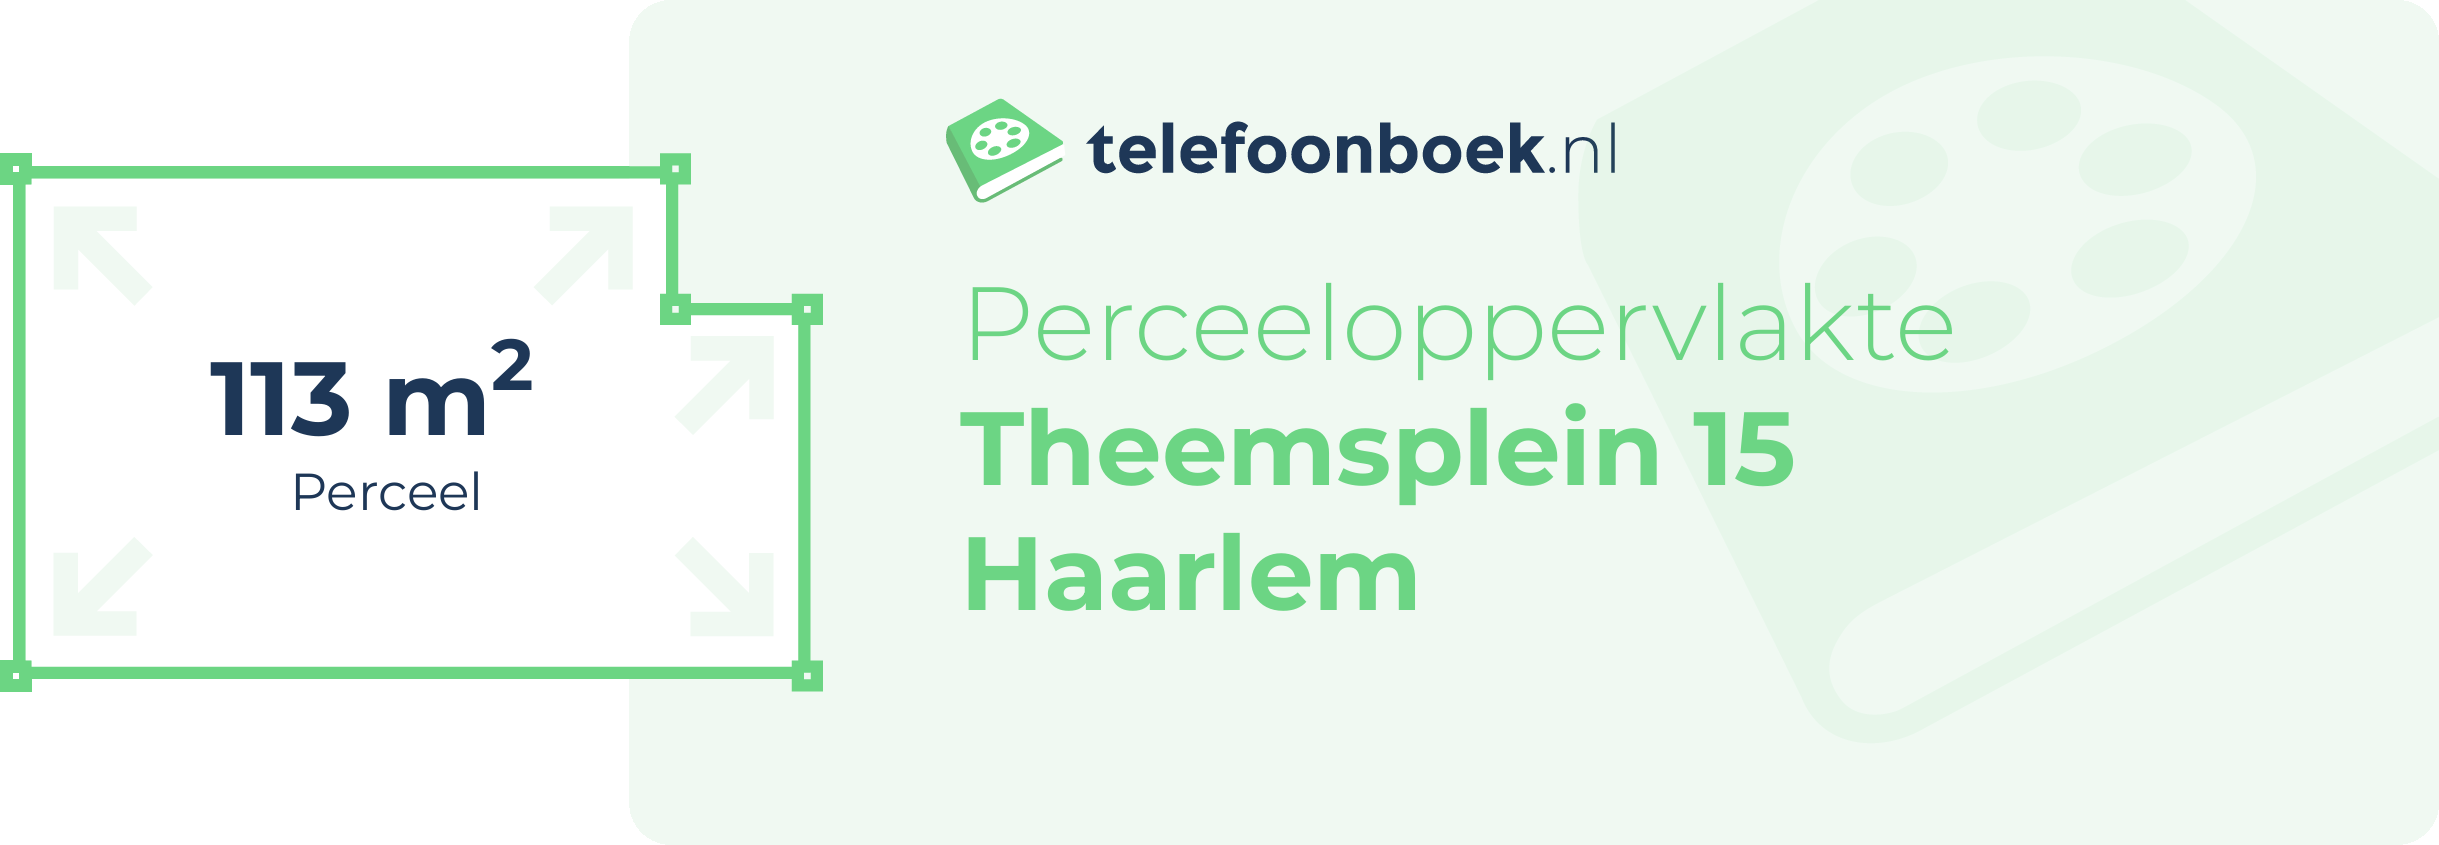 Perceeloppervlakte Theemsplein 15 Haarlem